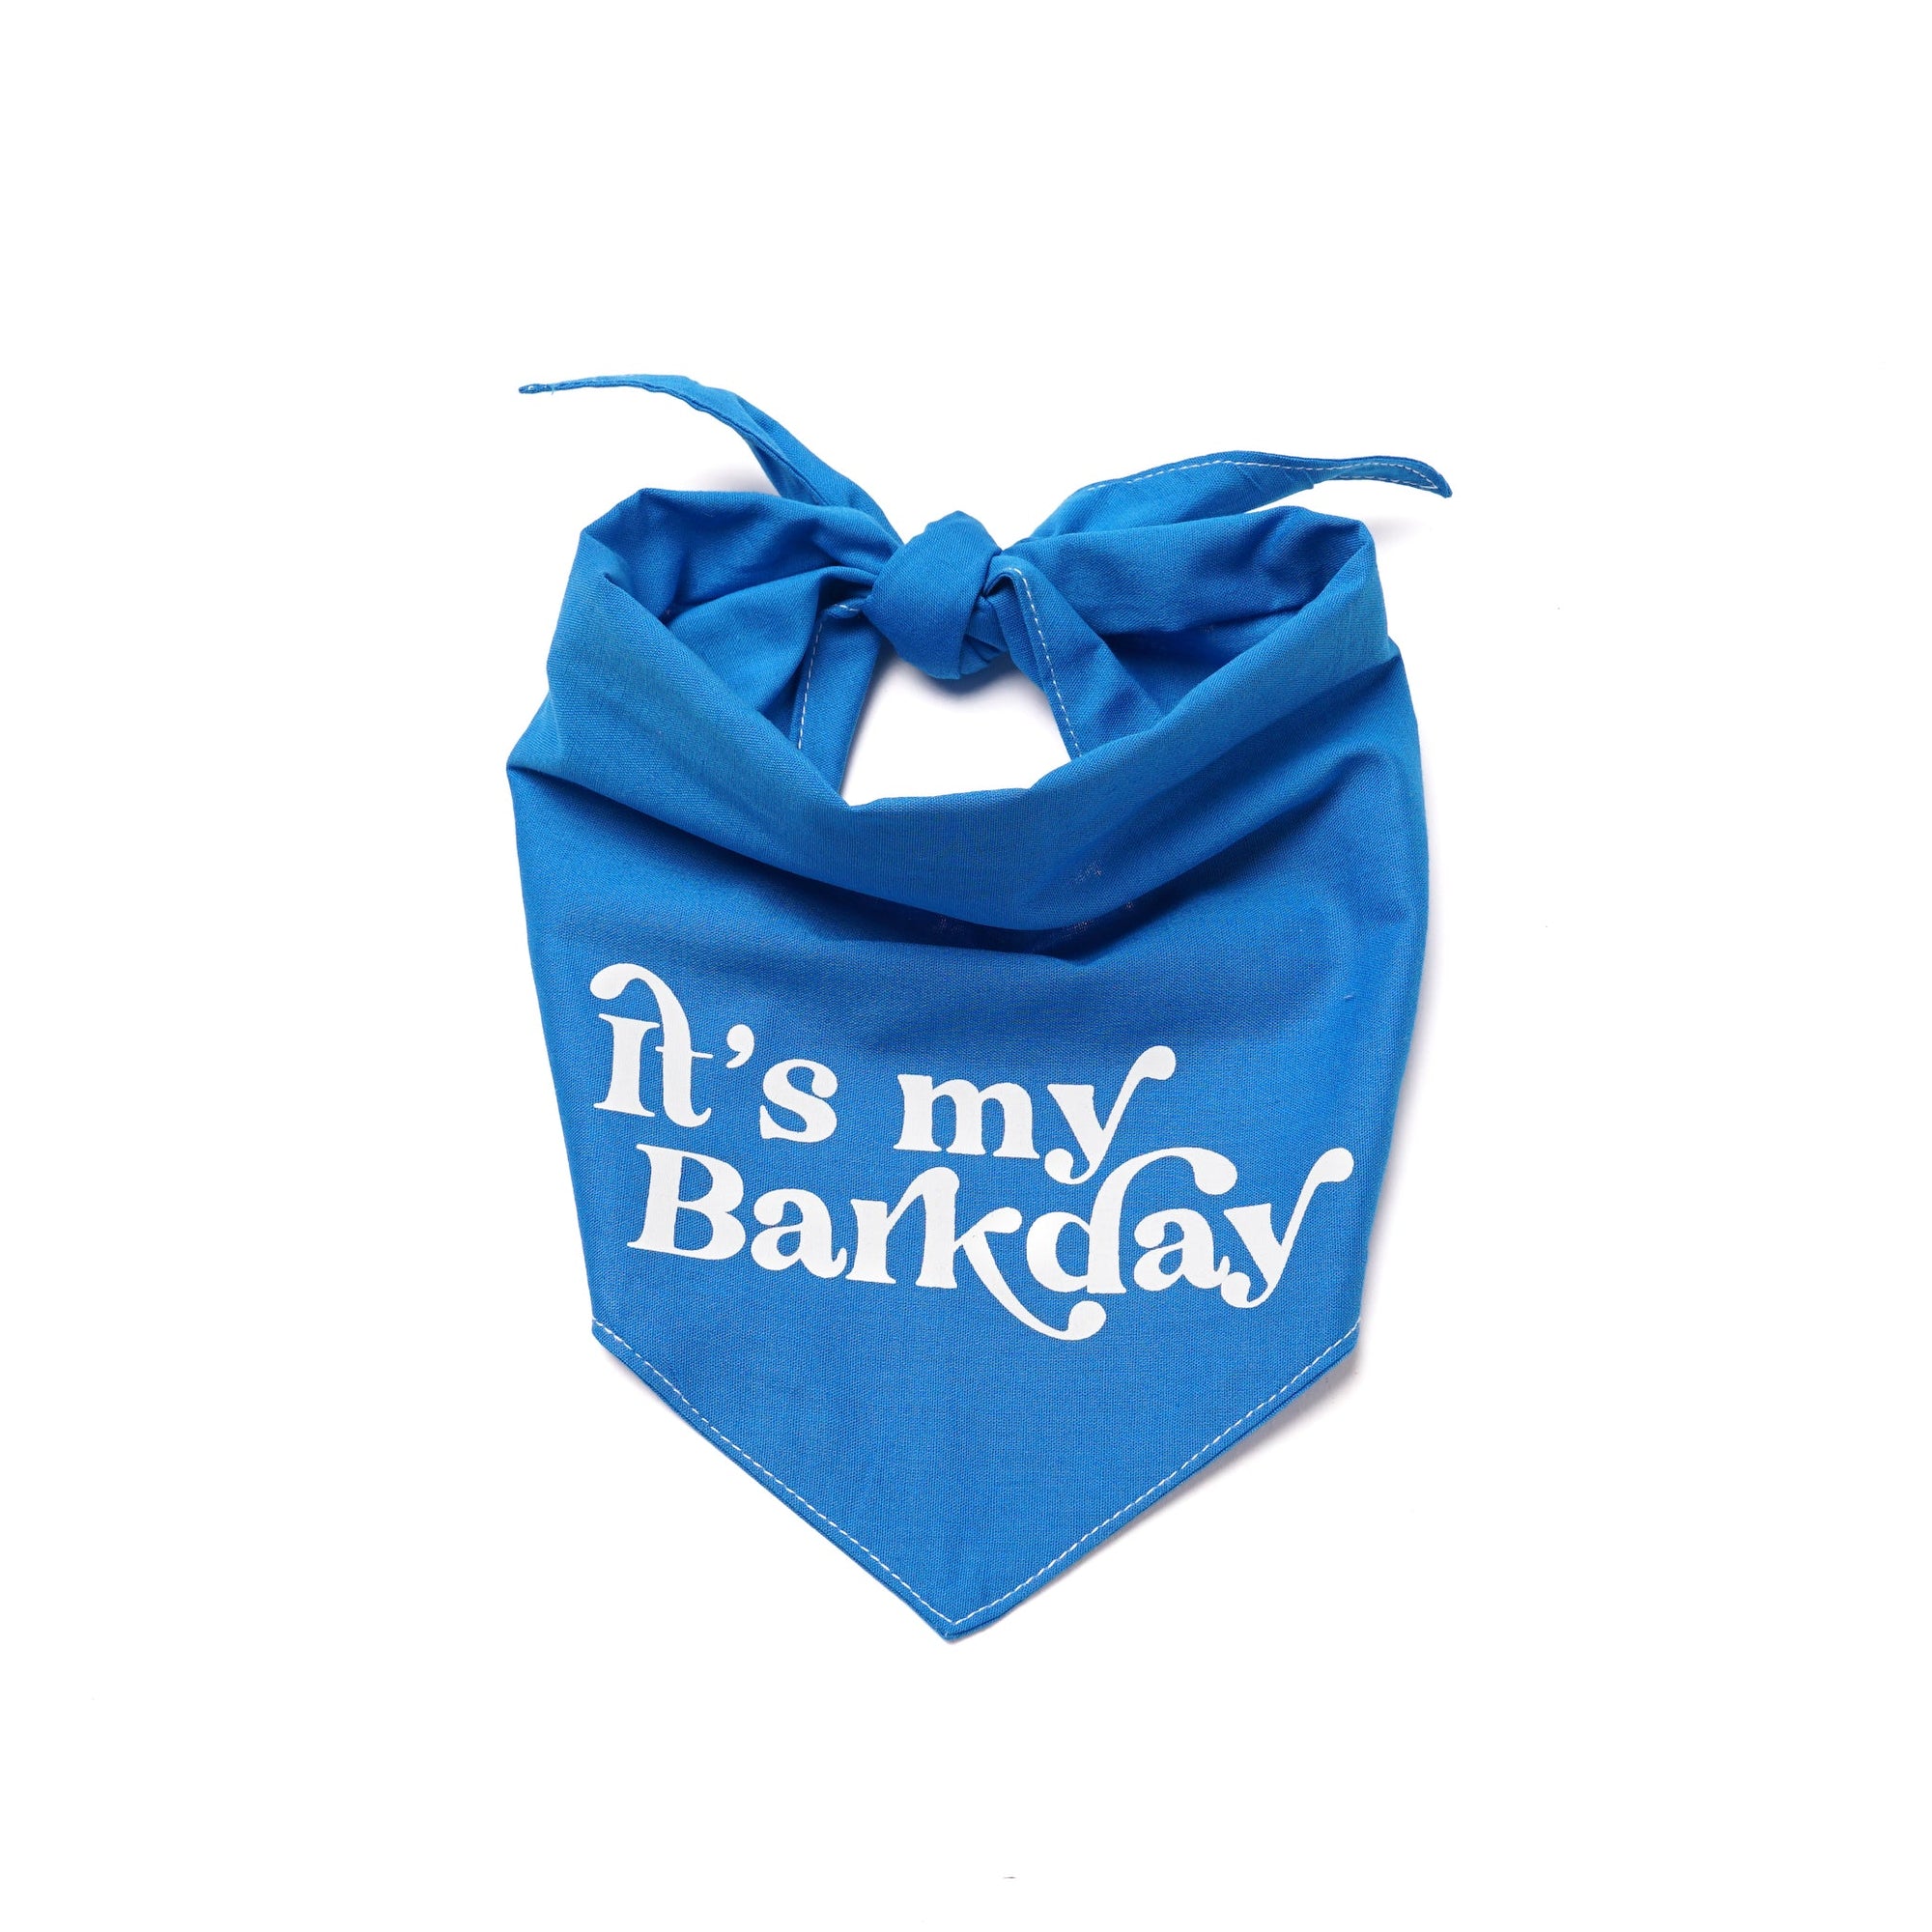 The Paws Barkday Bandana - Blue - Henlo Pets